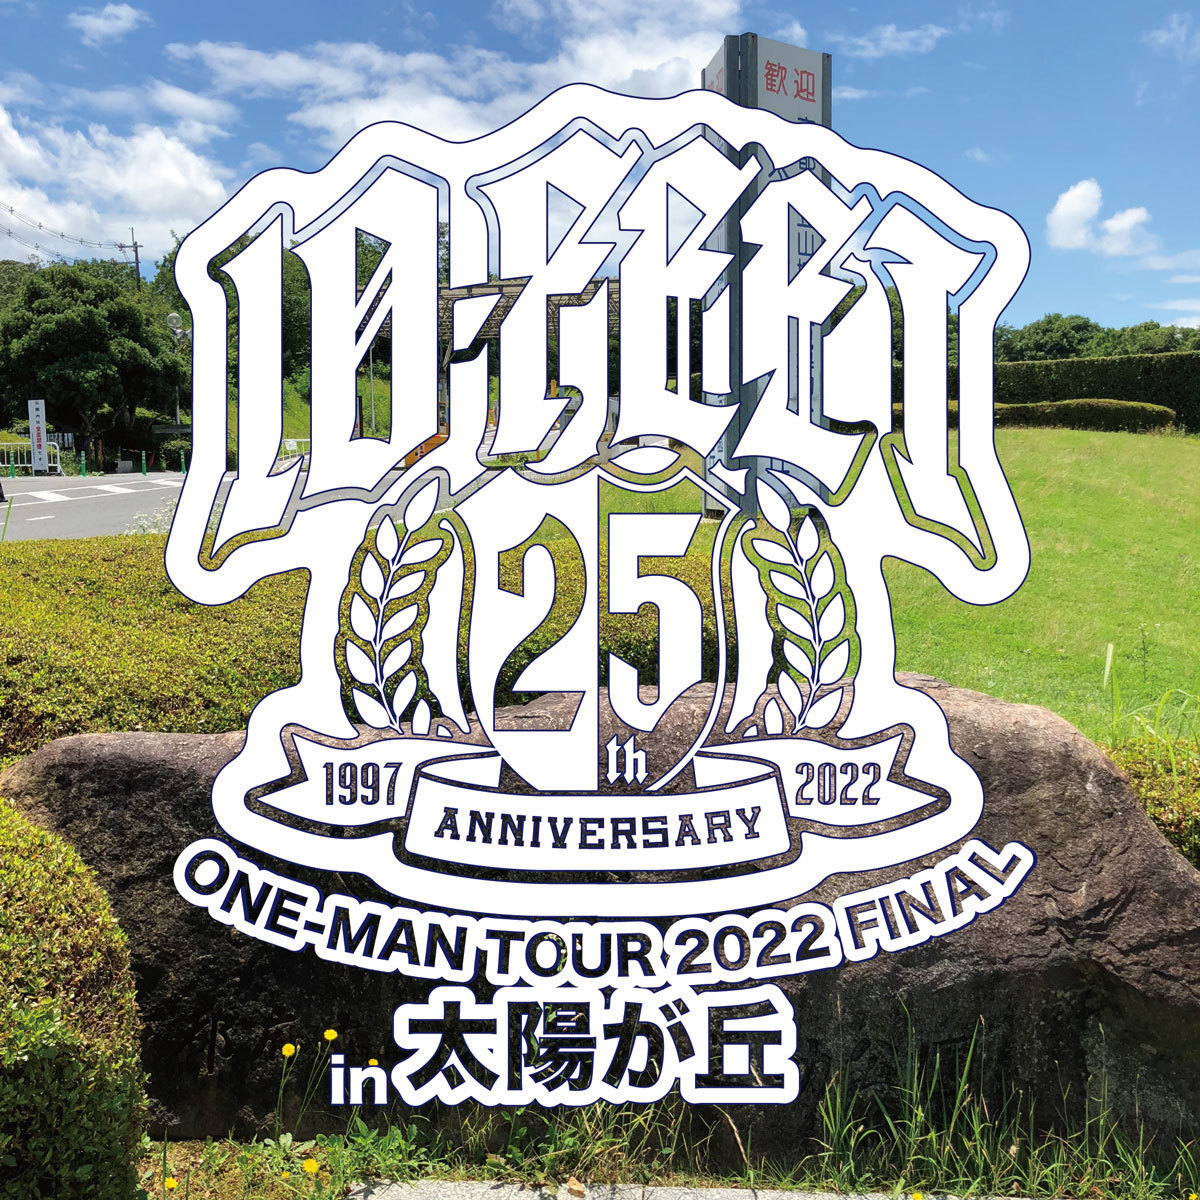 10-FEET 25th ANNIVERSARY ONE-MAN TOUR 2022 FINAL in 太陽が丘 10.8 